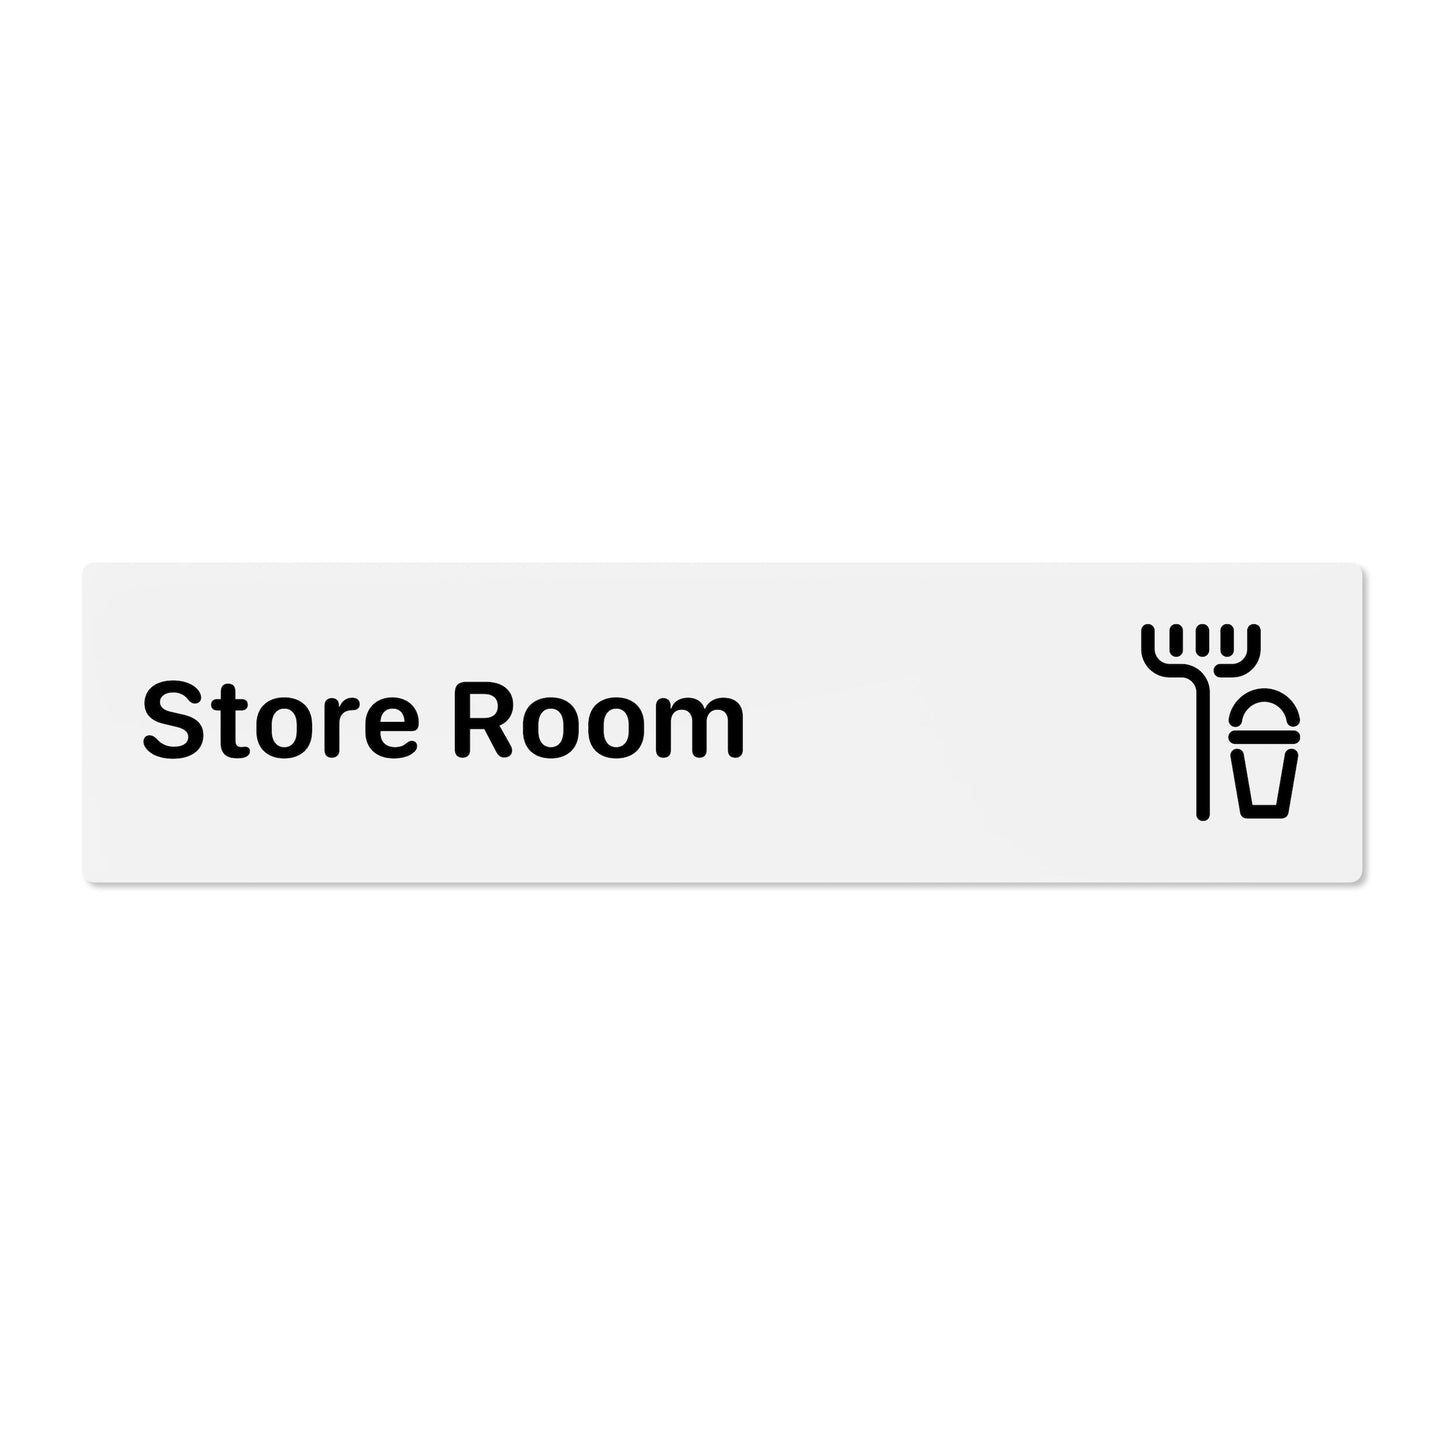 Store Room